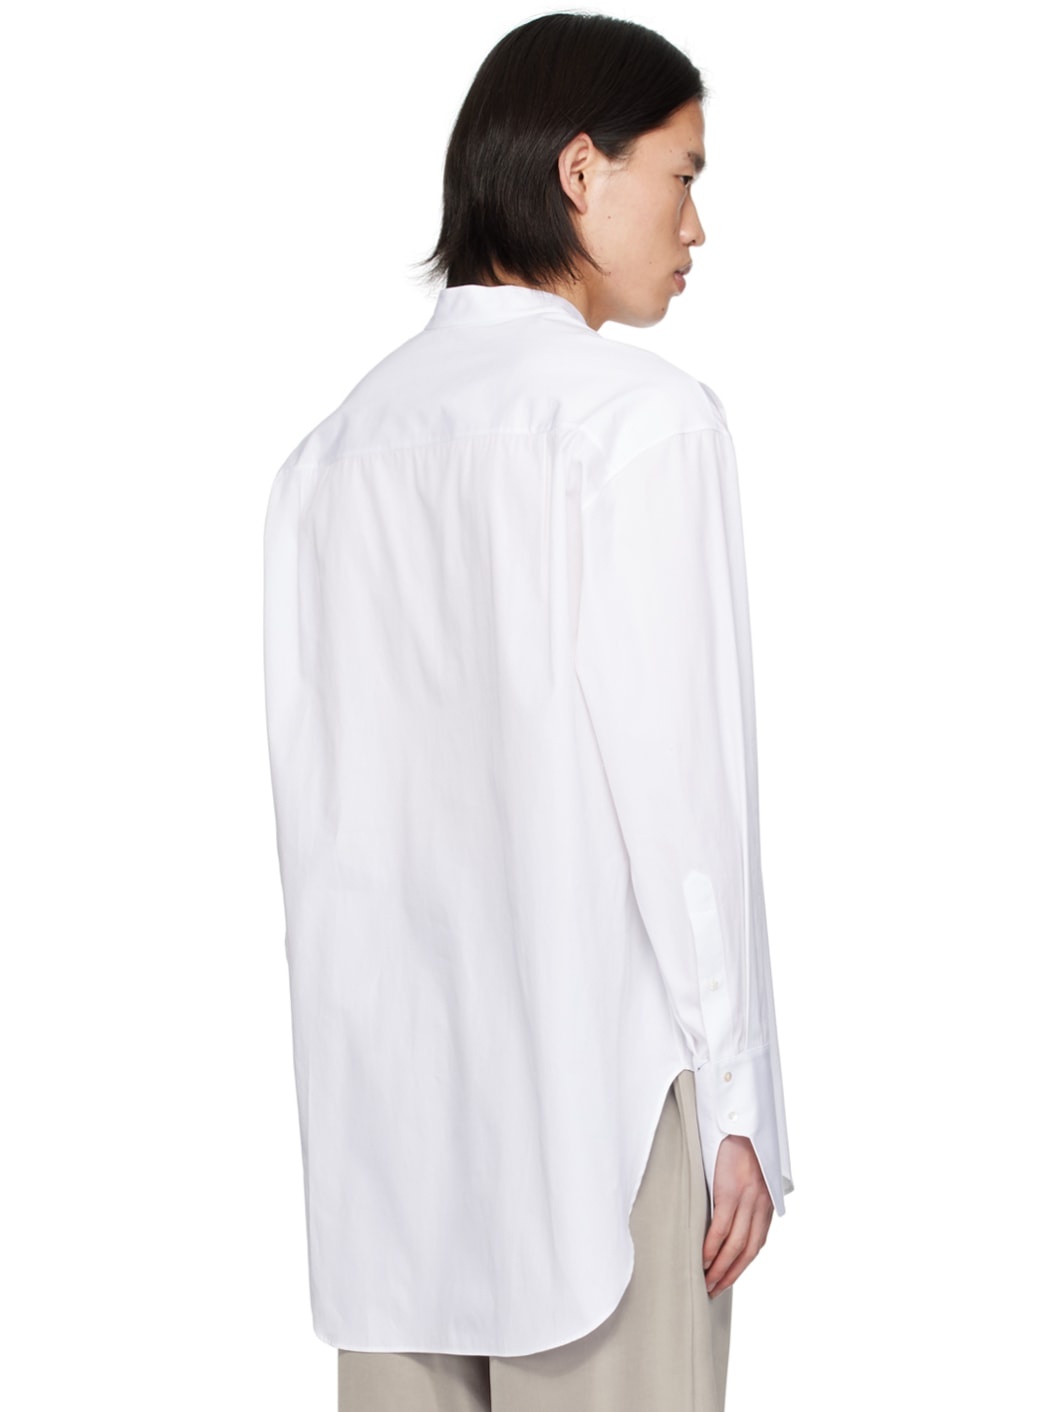 White Ridley Shirt - 3